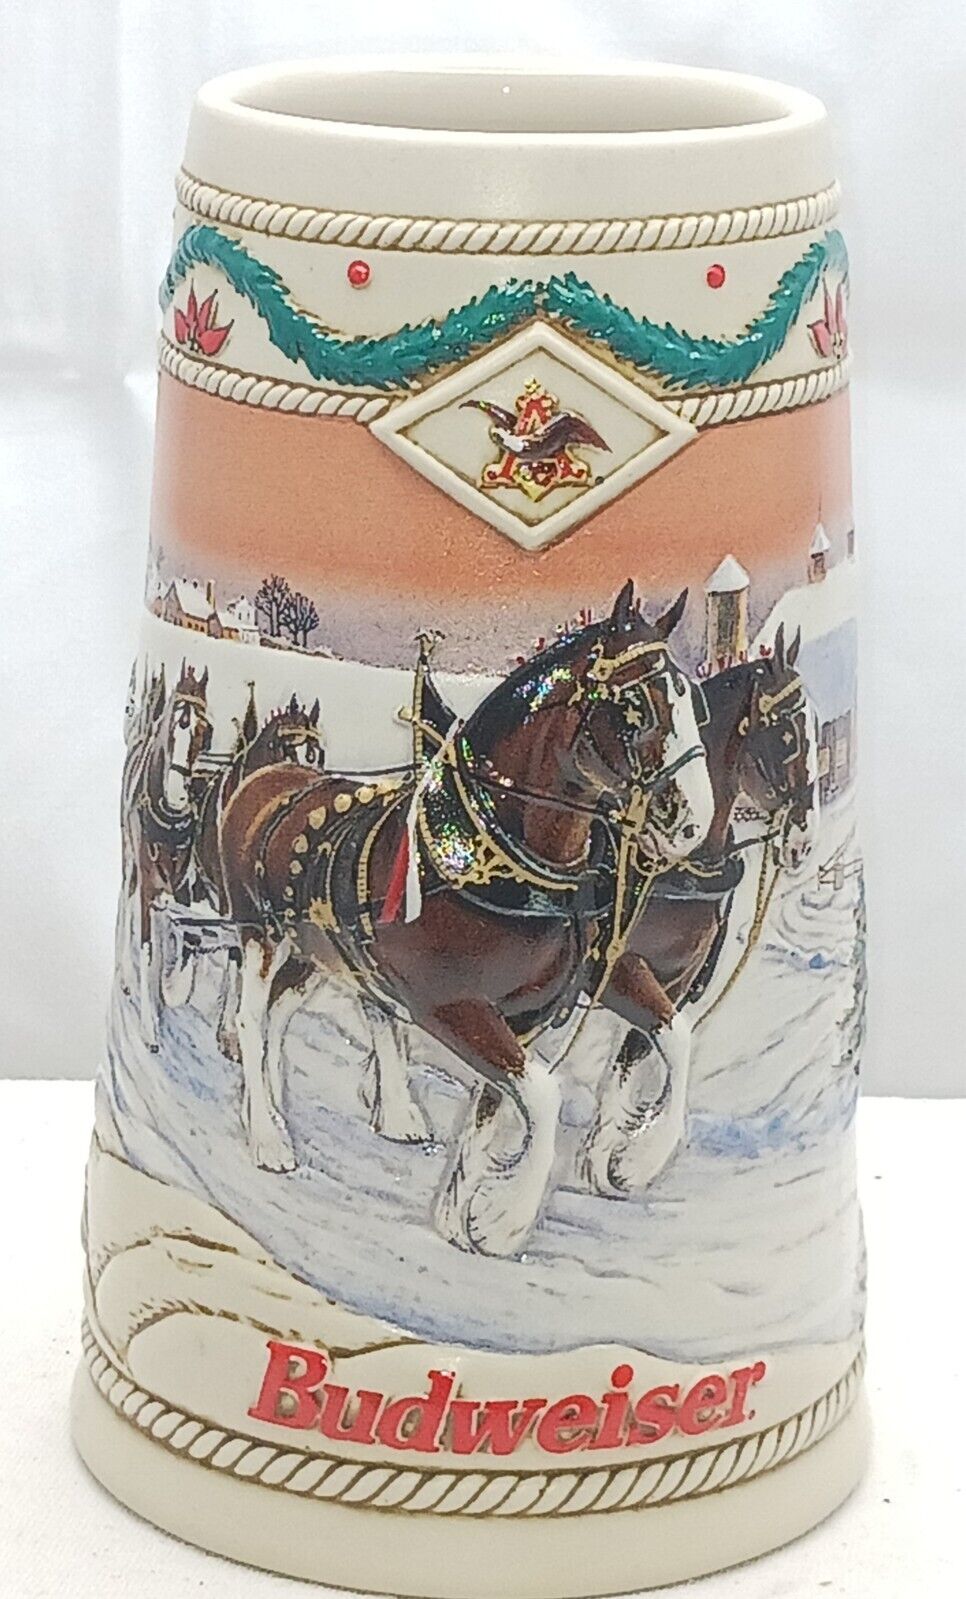 Budweiser Stein Mug 1996 Collectible Ceramic American Homestead Holiday Gift